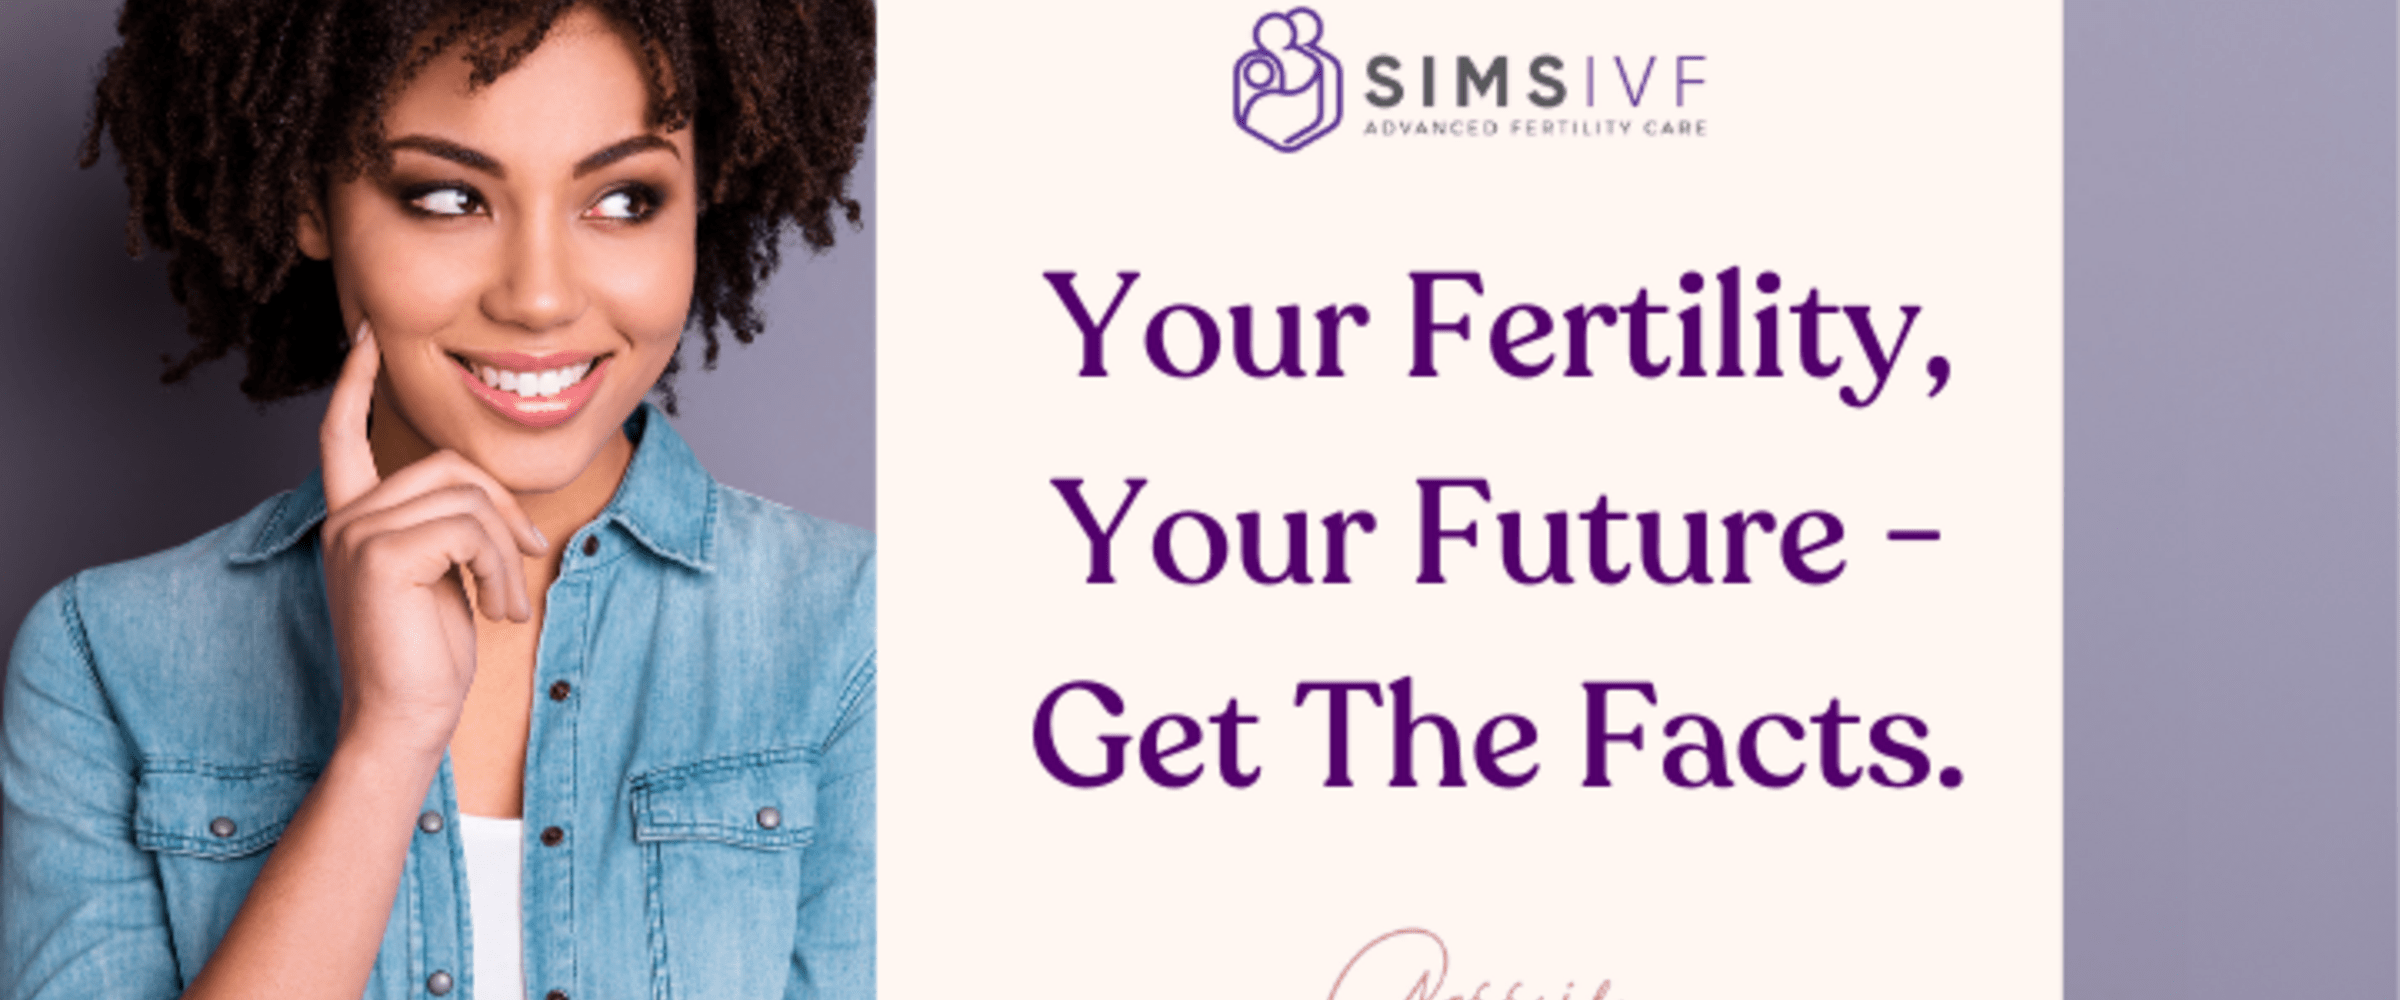 Fertility facts 